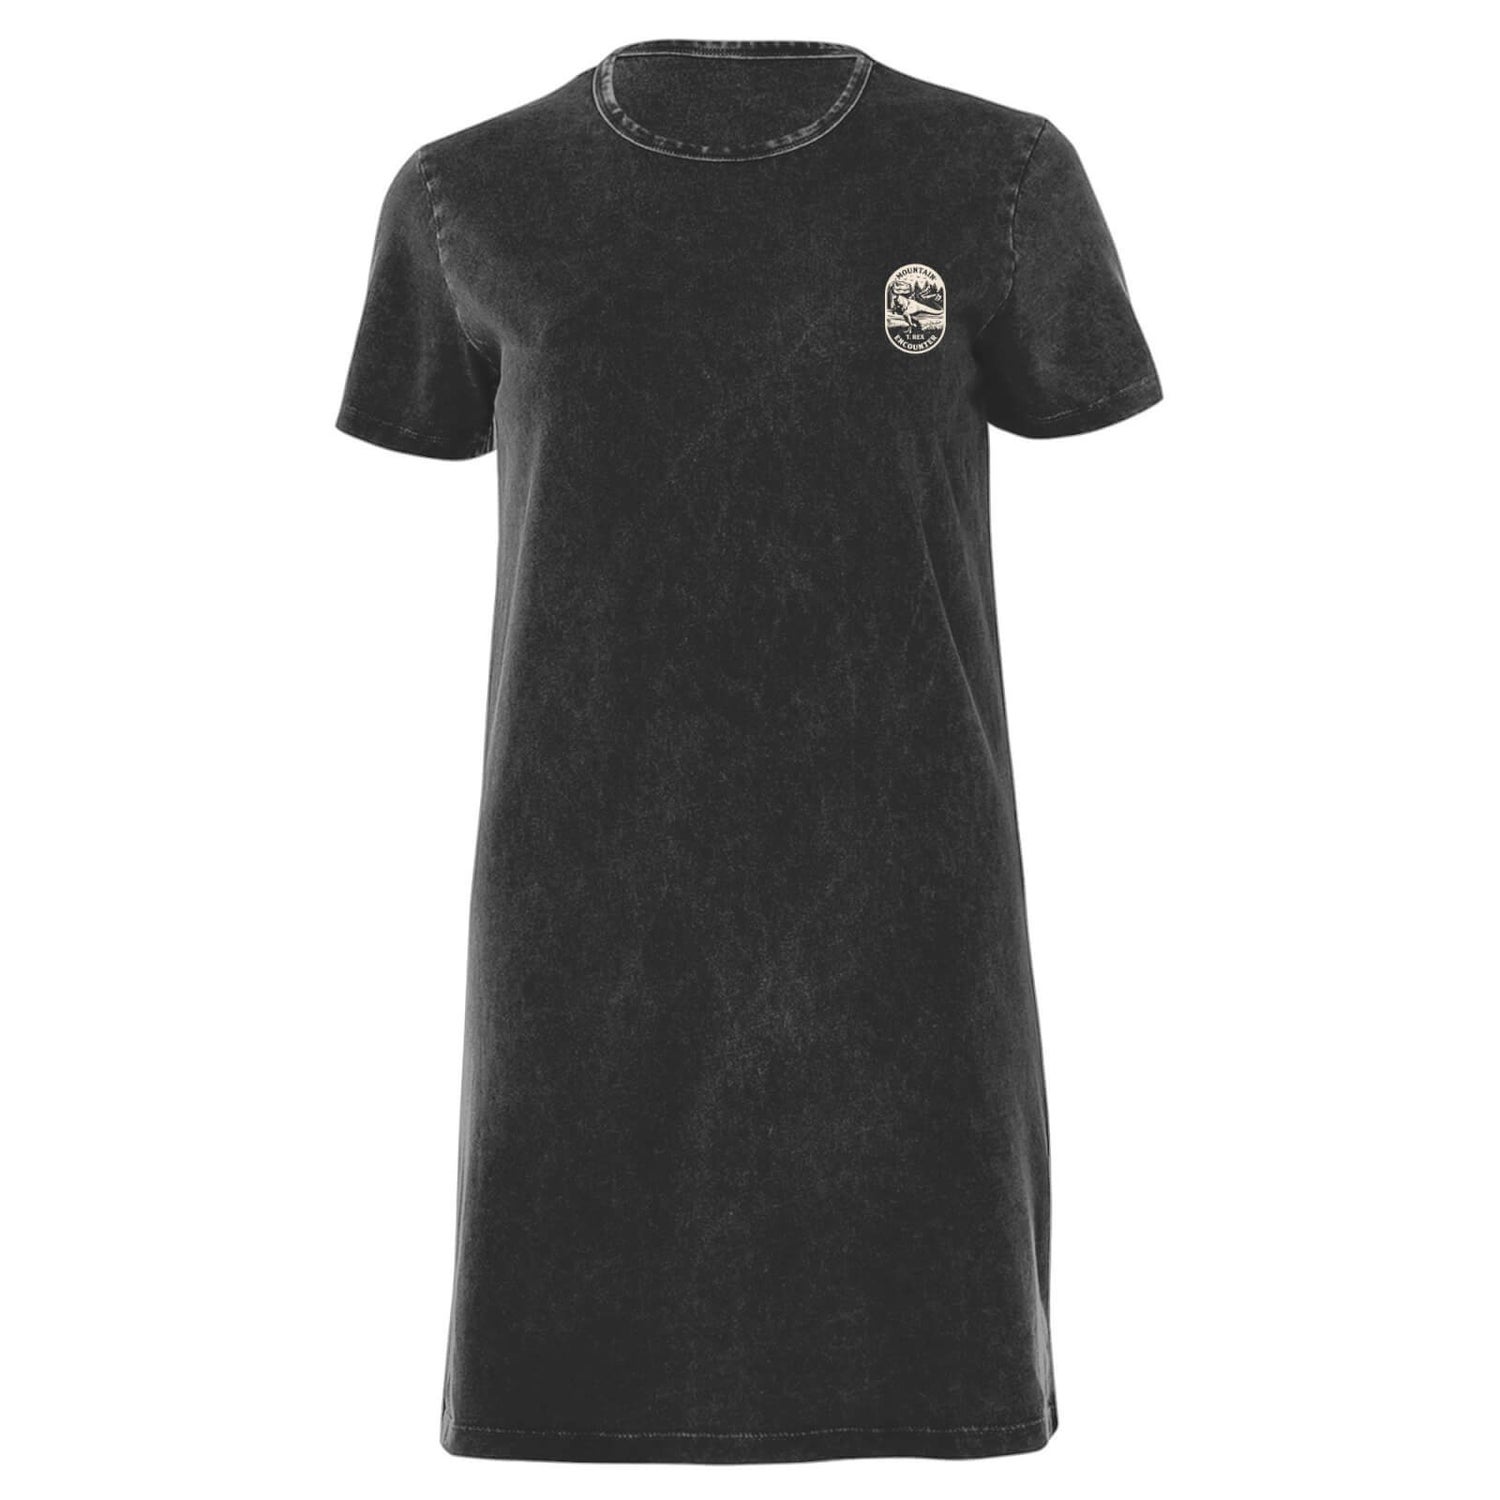 Jurassic World T-Rex Encounter Women's T-Shirt Dress - Black Acid Wash